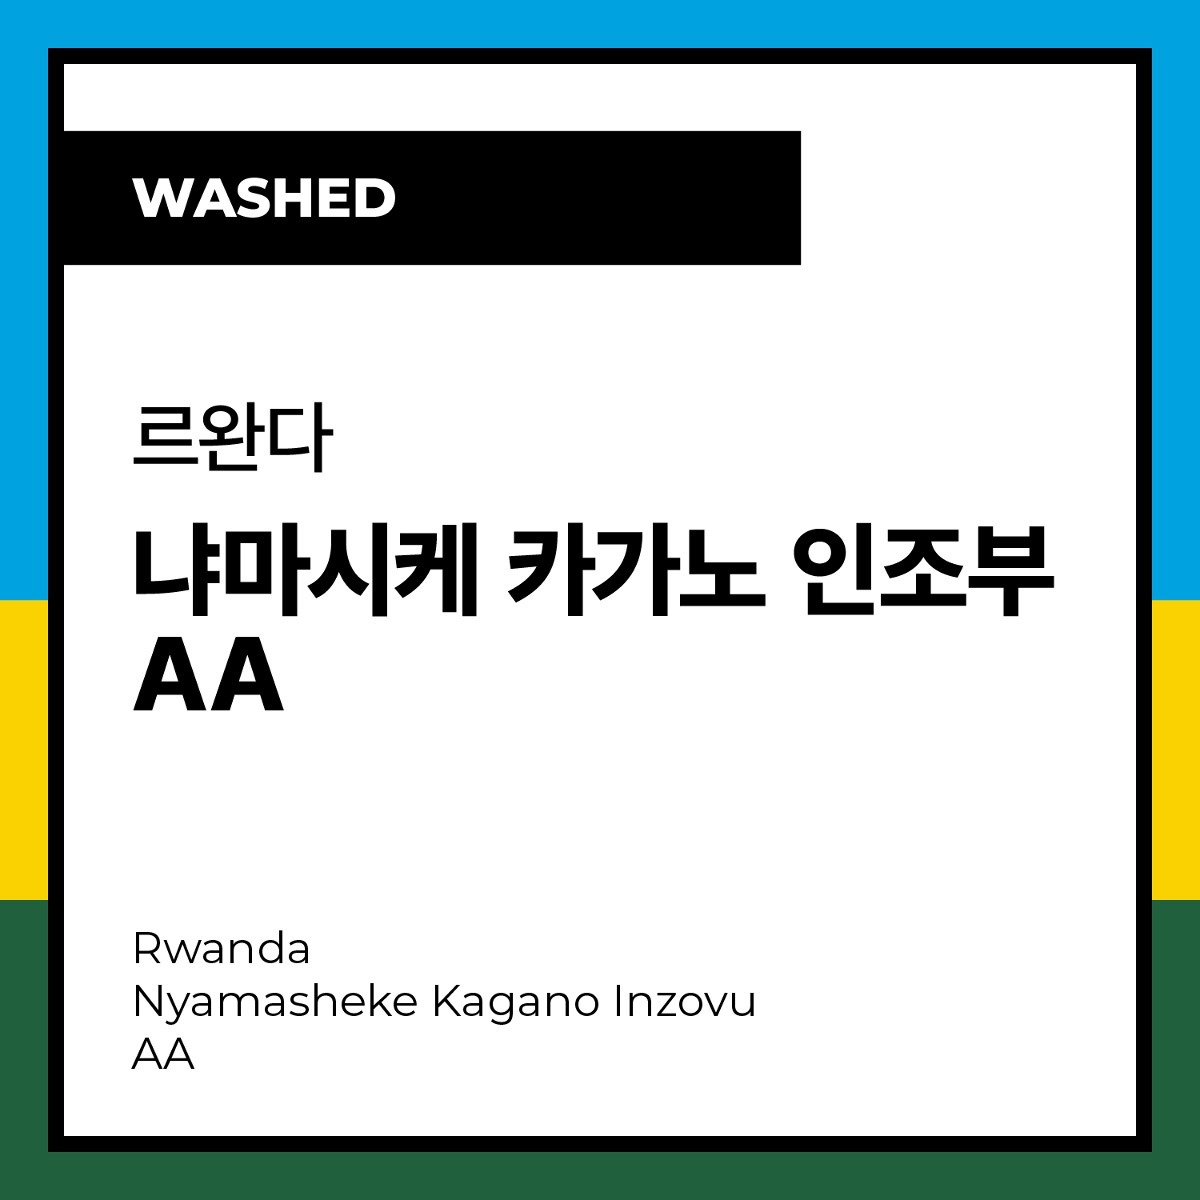 Rwanda Nyamasheke Kagano Inzovu AA (Washed) 르완다 냐마시케 카가노 인조부 AA (워시드)